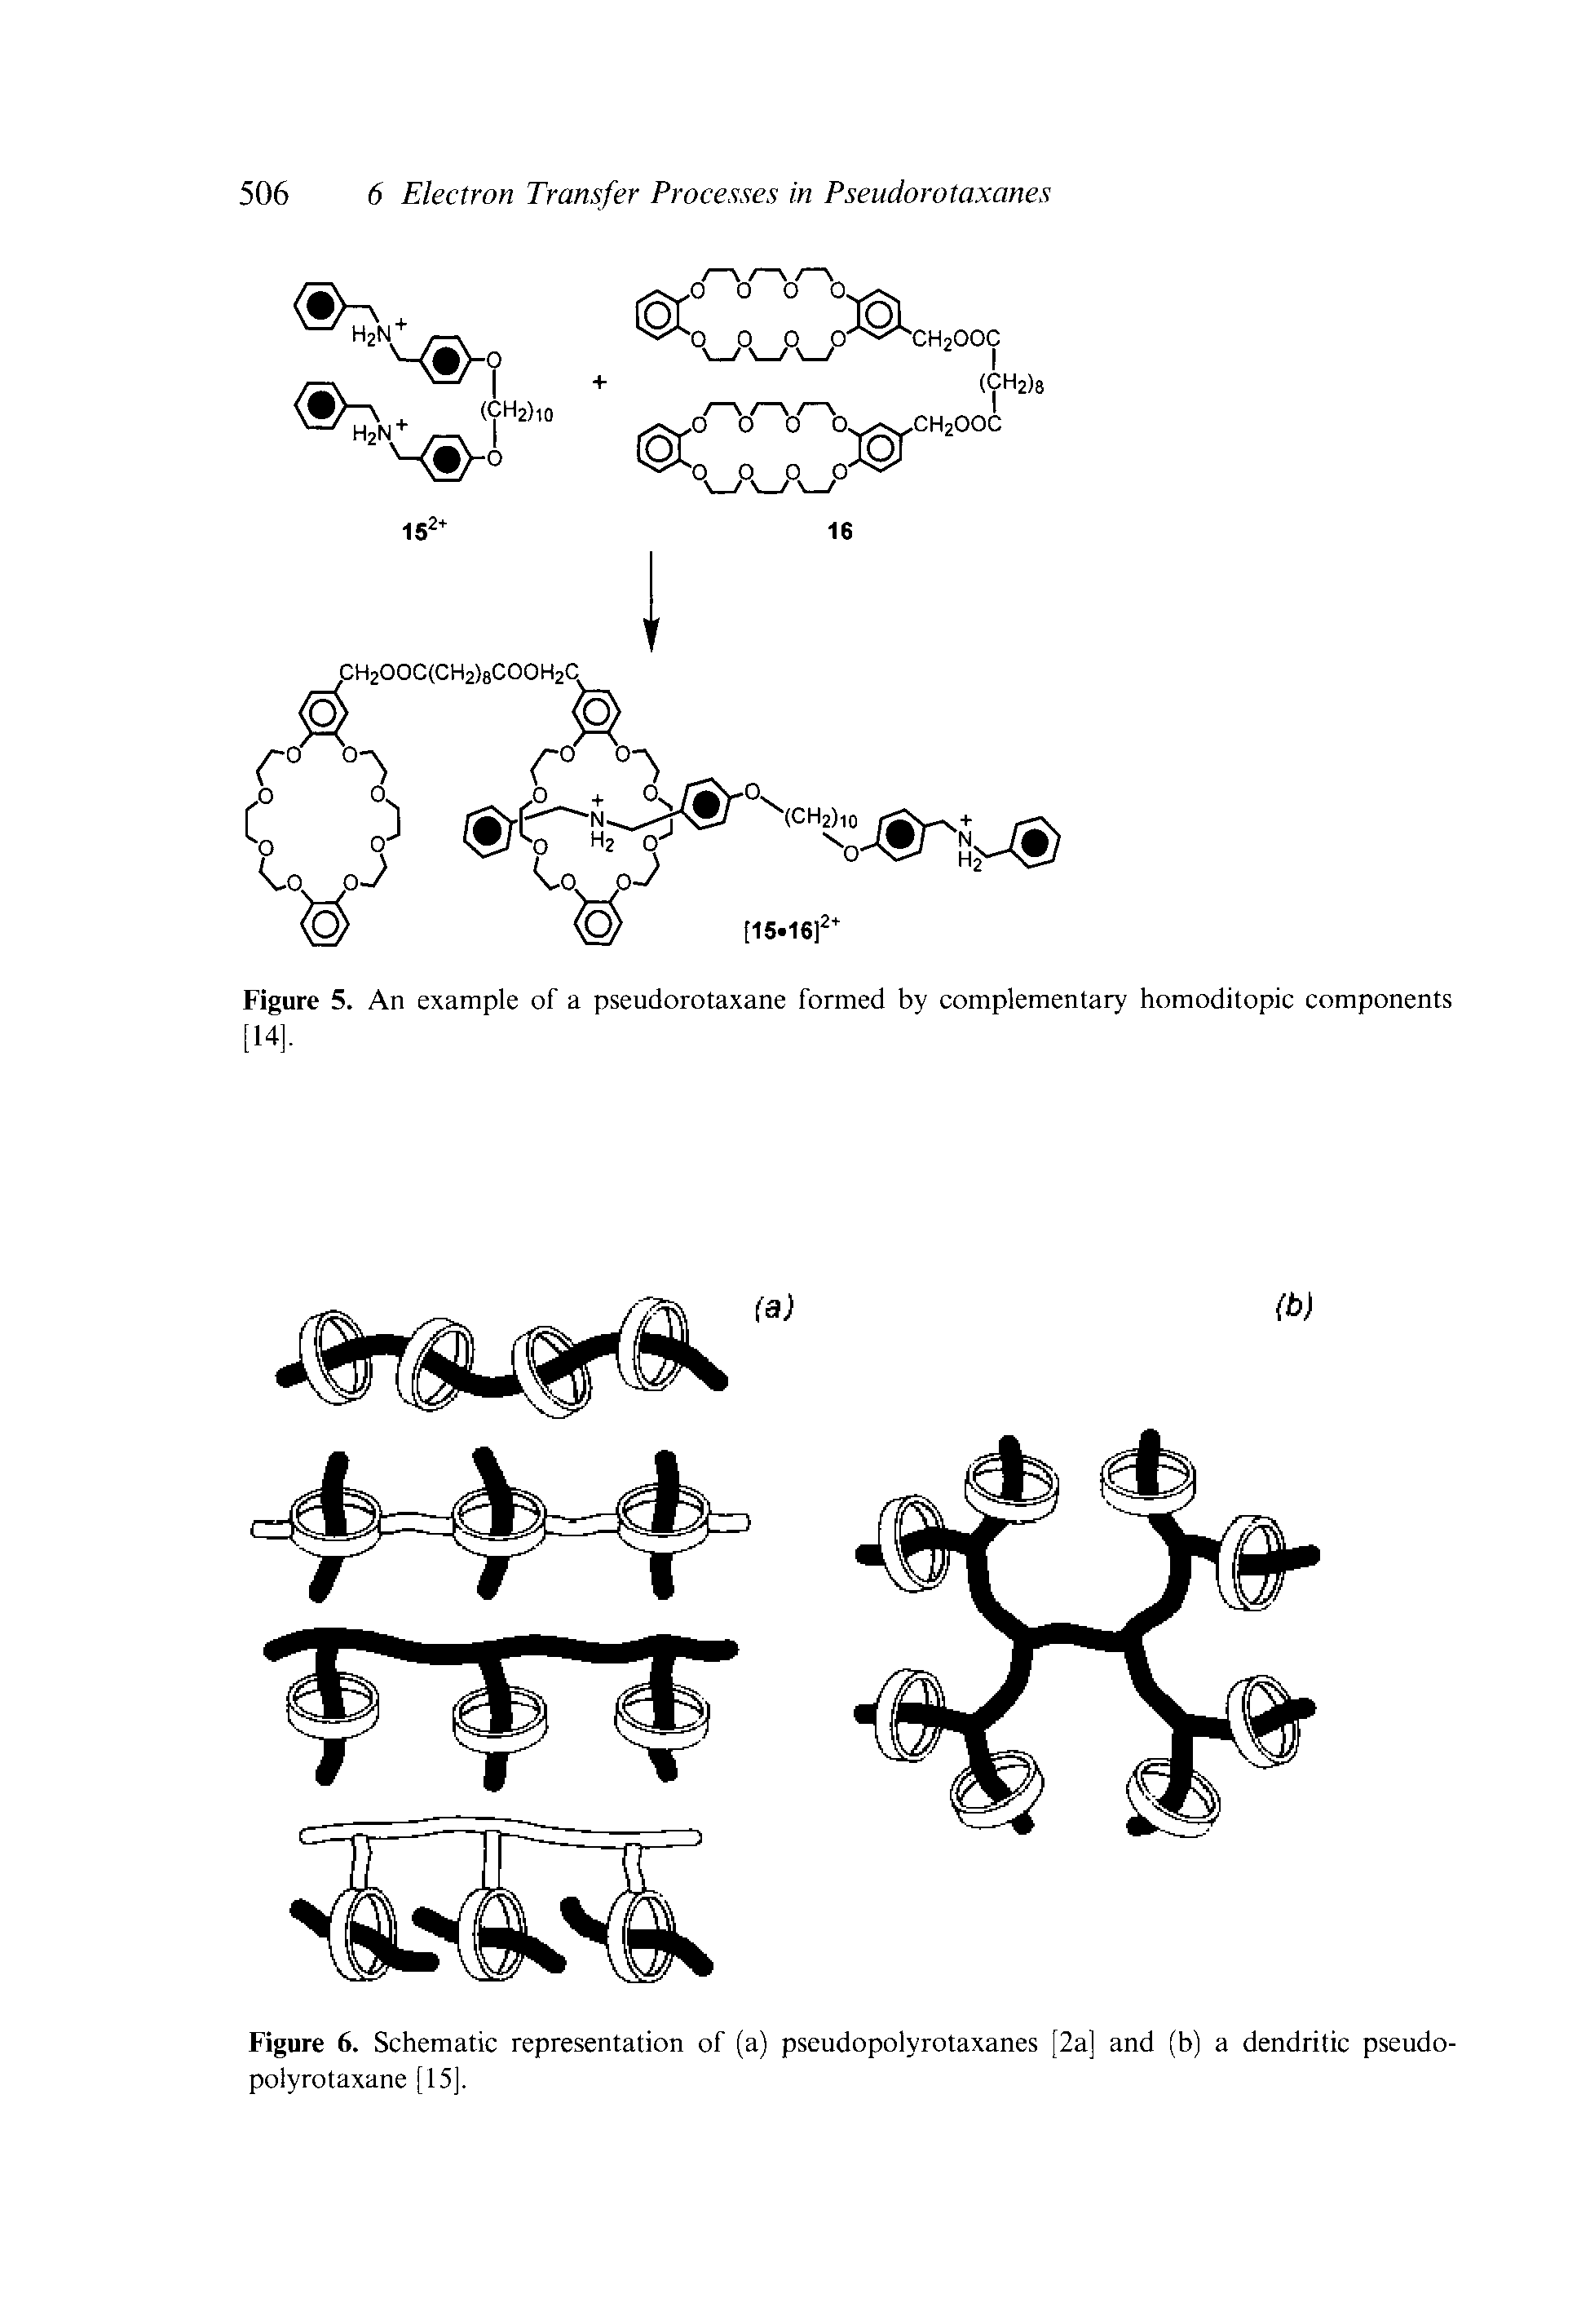 Figure 6. Schematic representation of (a) pseudopolyrotaxanes [2a] and (b) a dendritic pseudo-polyrotaxane [15].